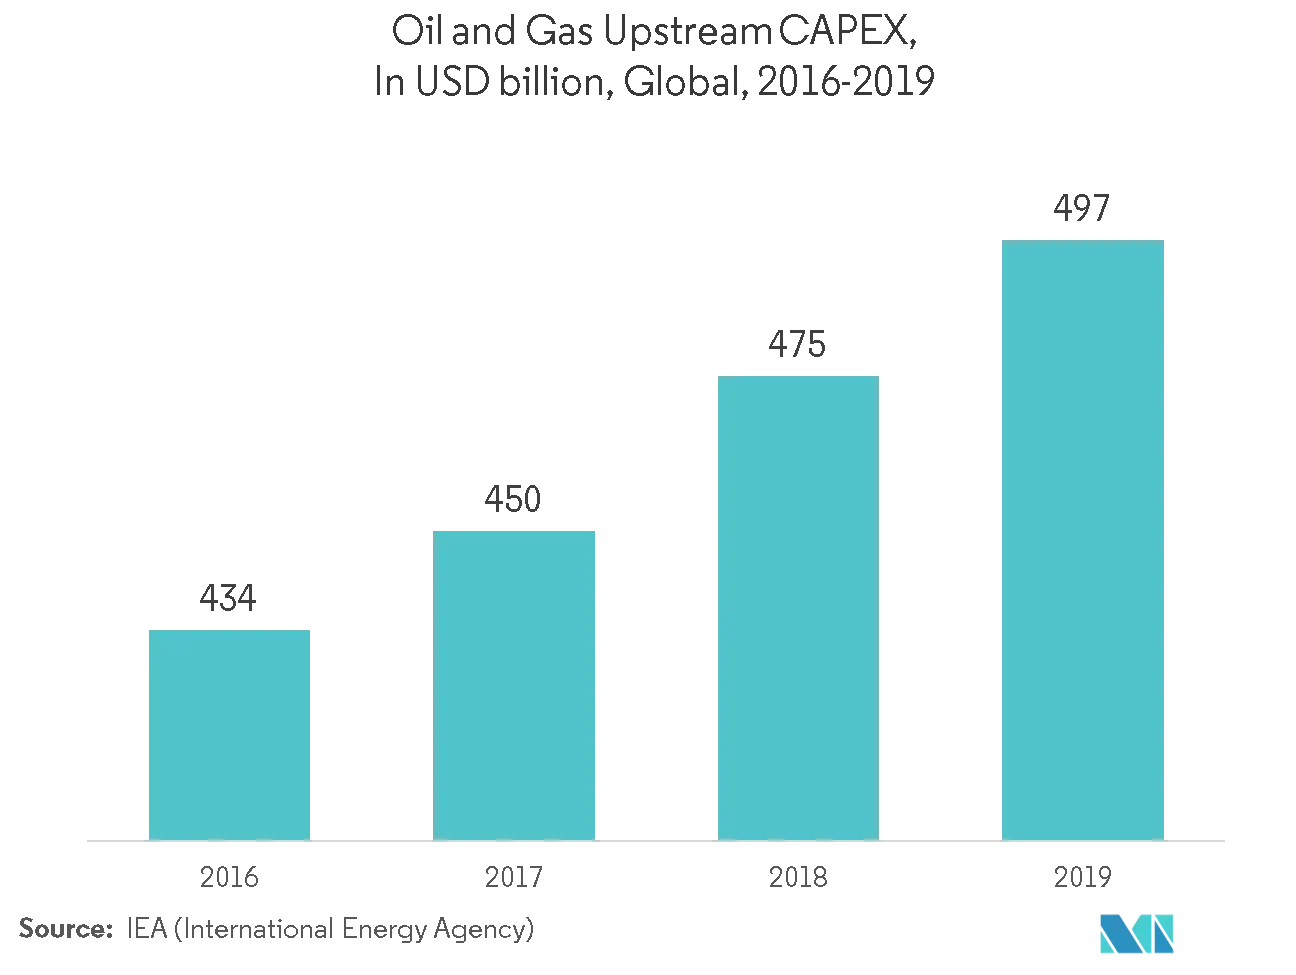 E-House Market: Oil and Gas Upstream CAPEX, In USD billion, Global, 2016-2019